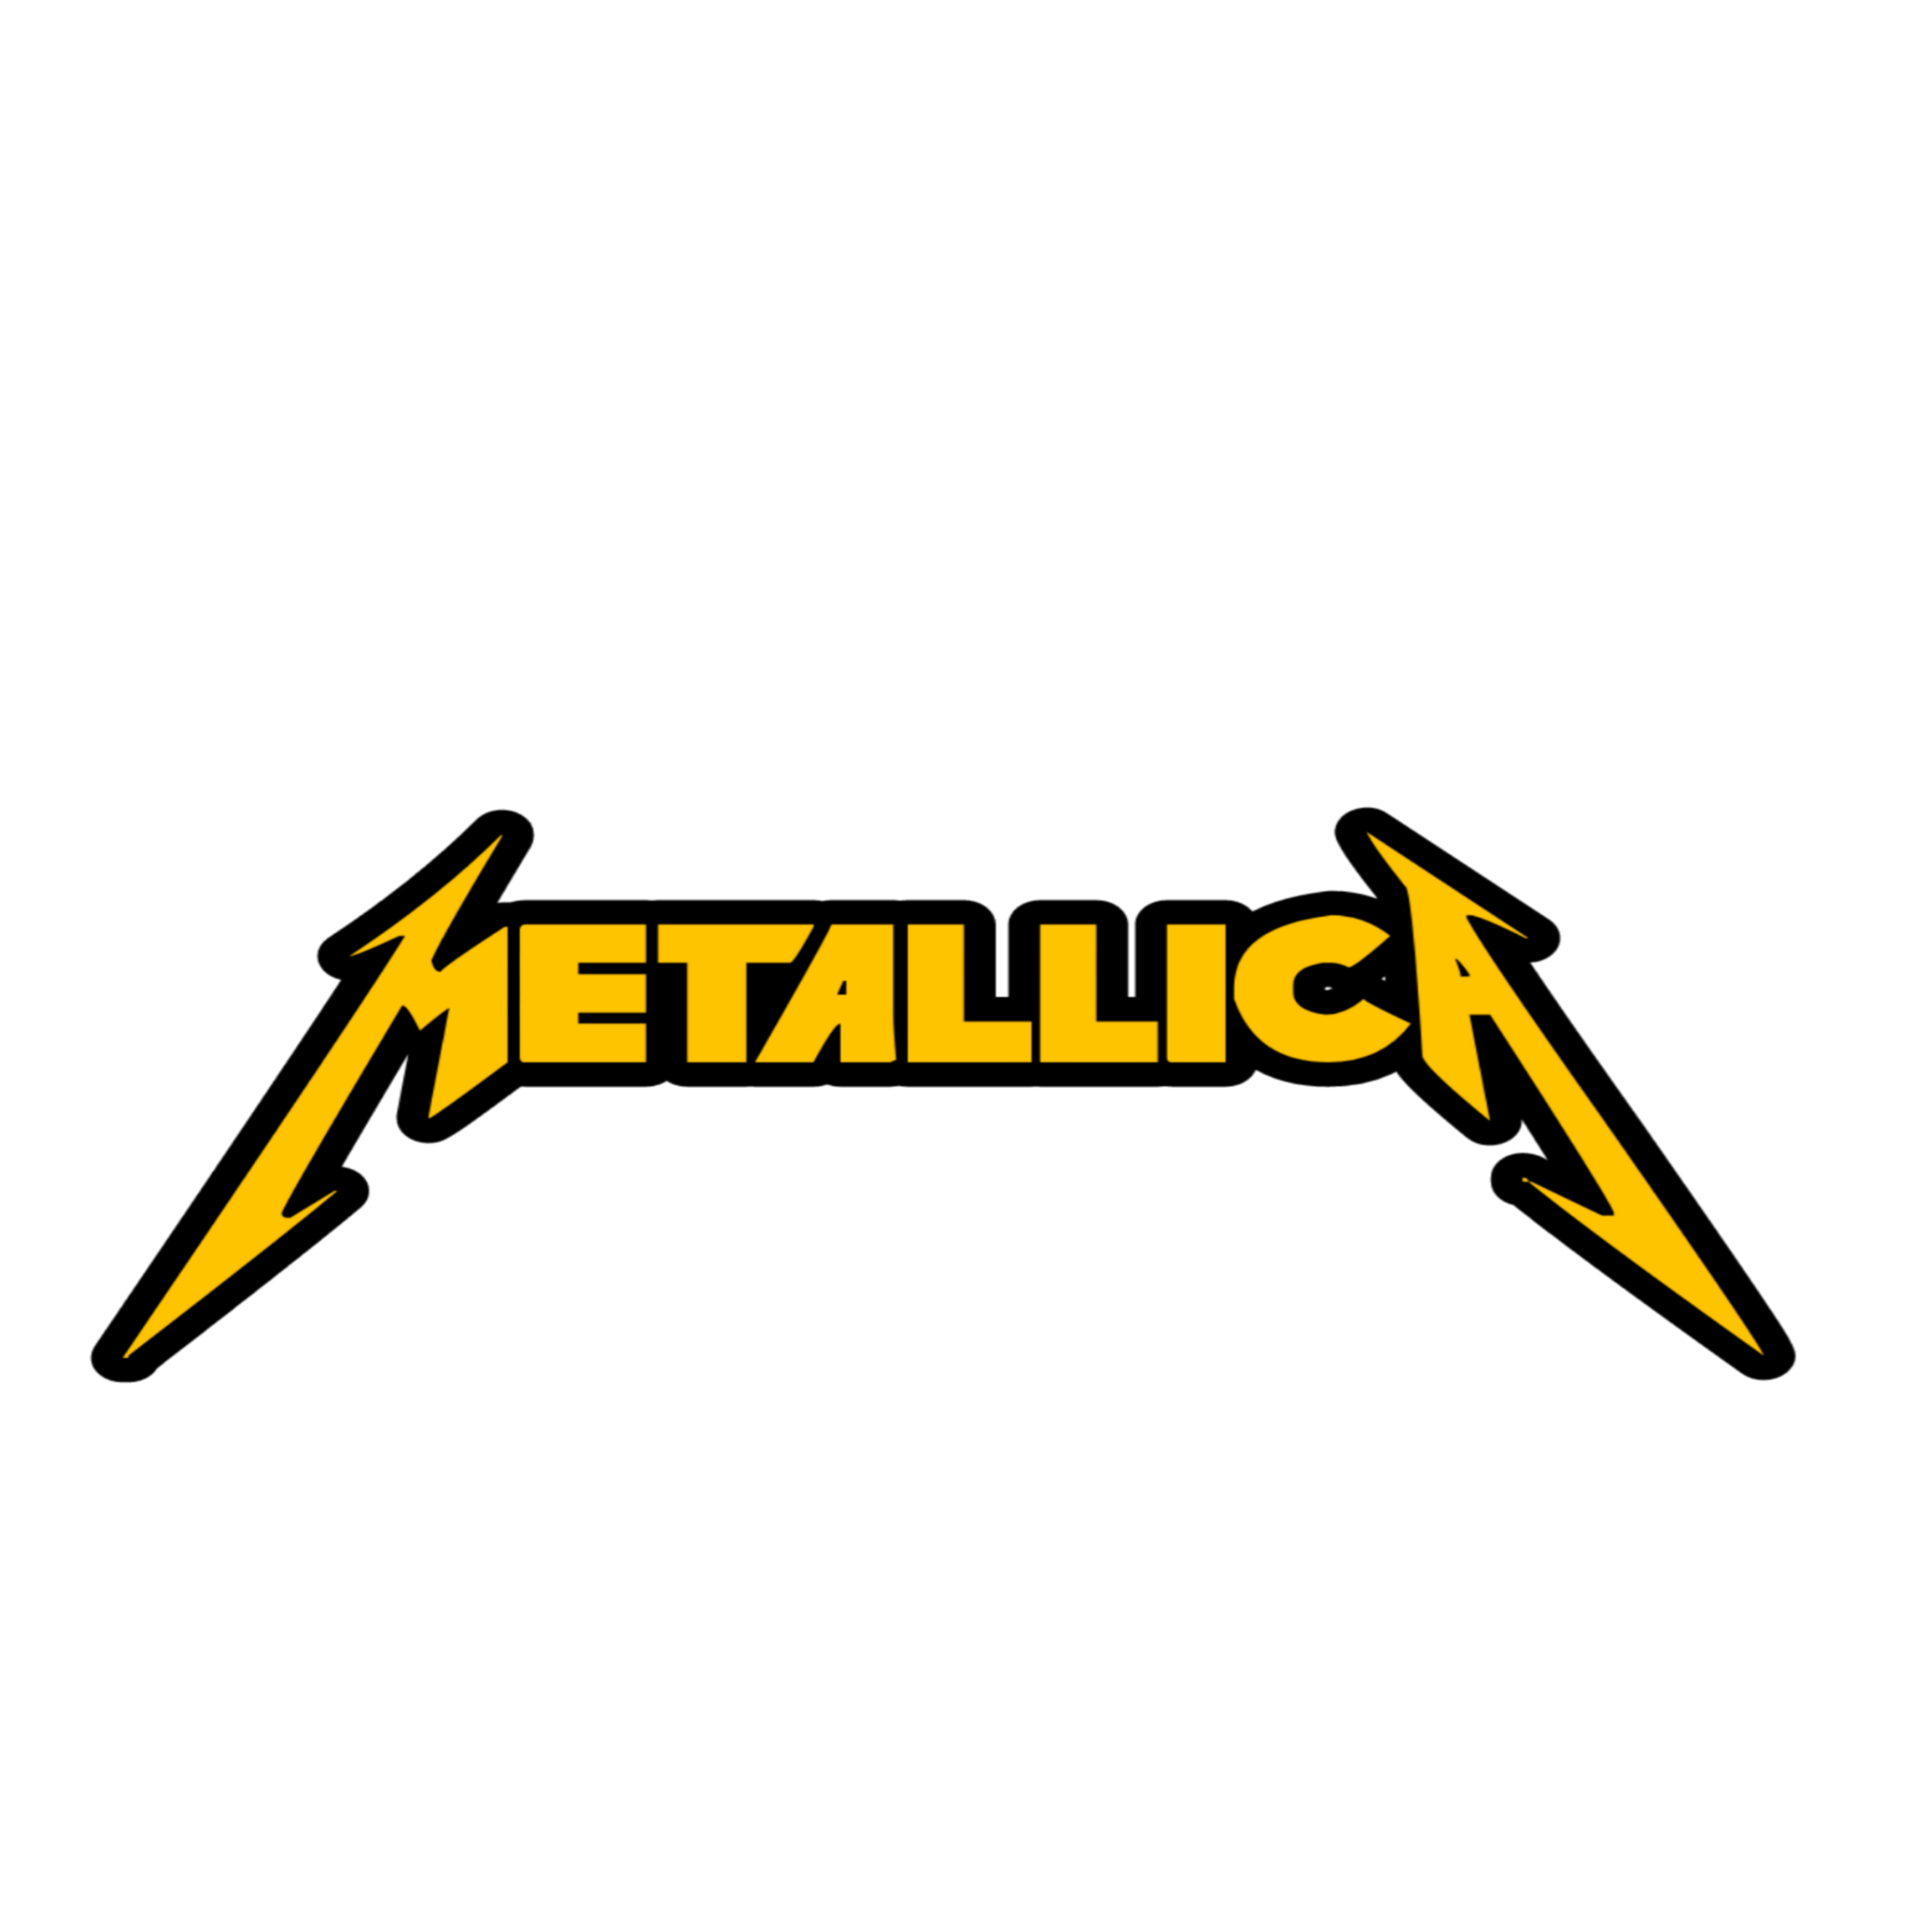 Metallica Band Logotipo PNG Imagen - PNG All